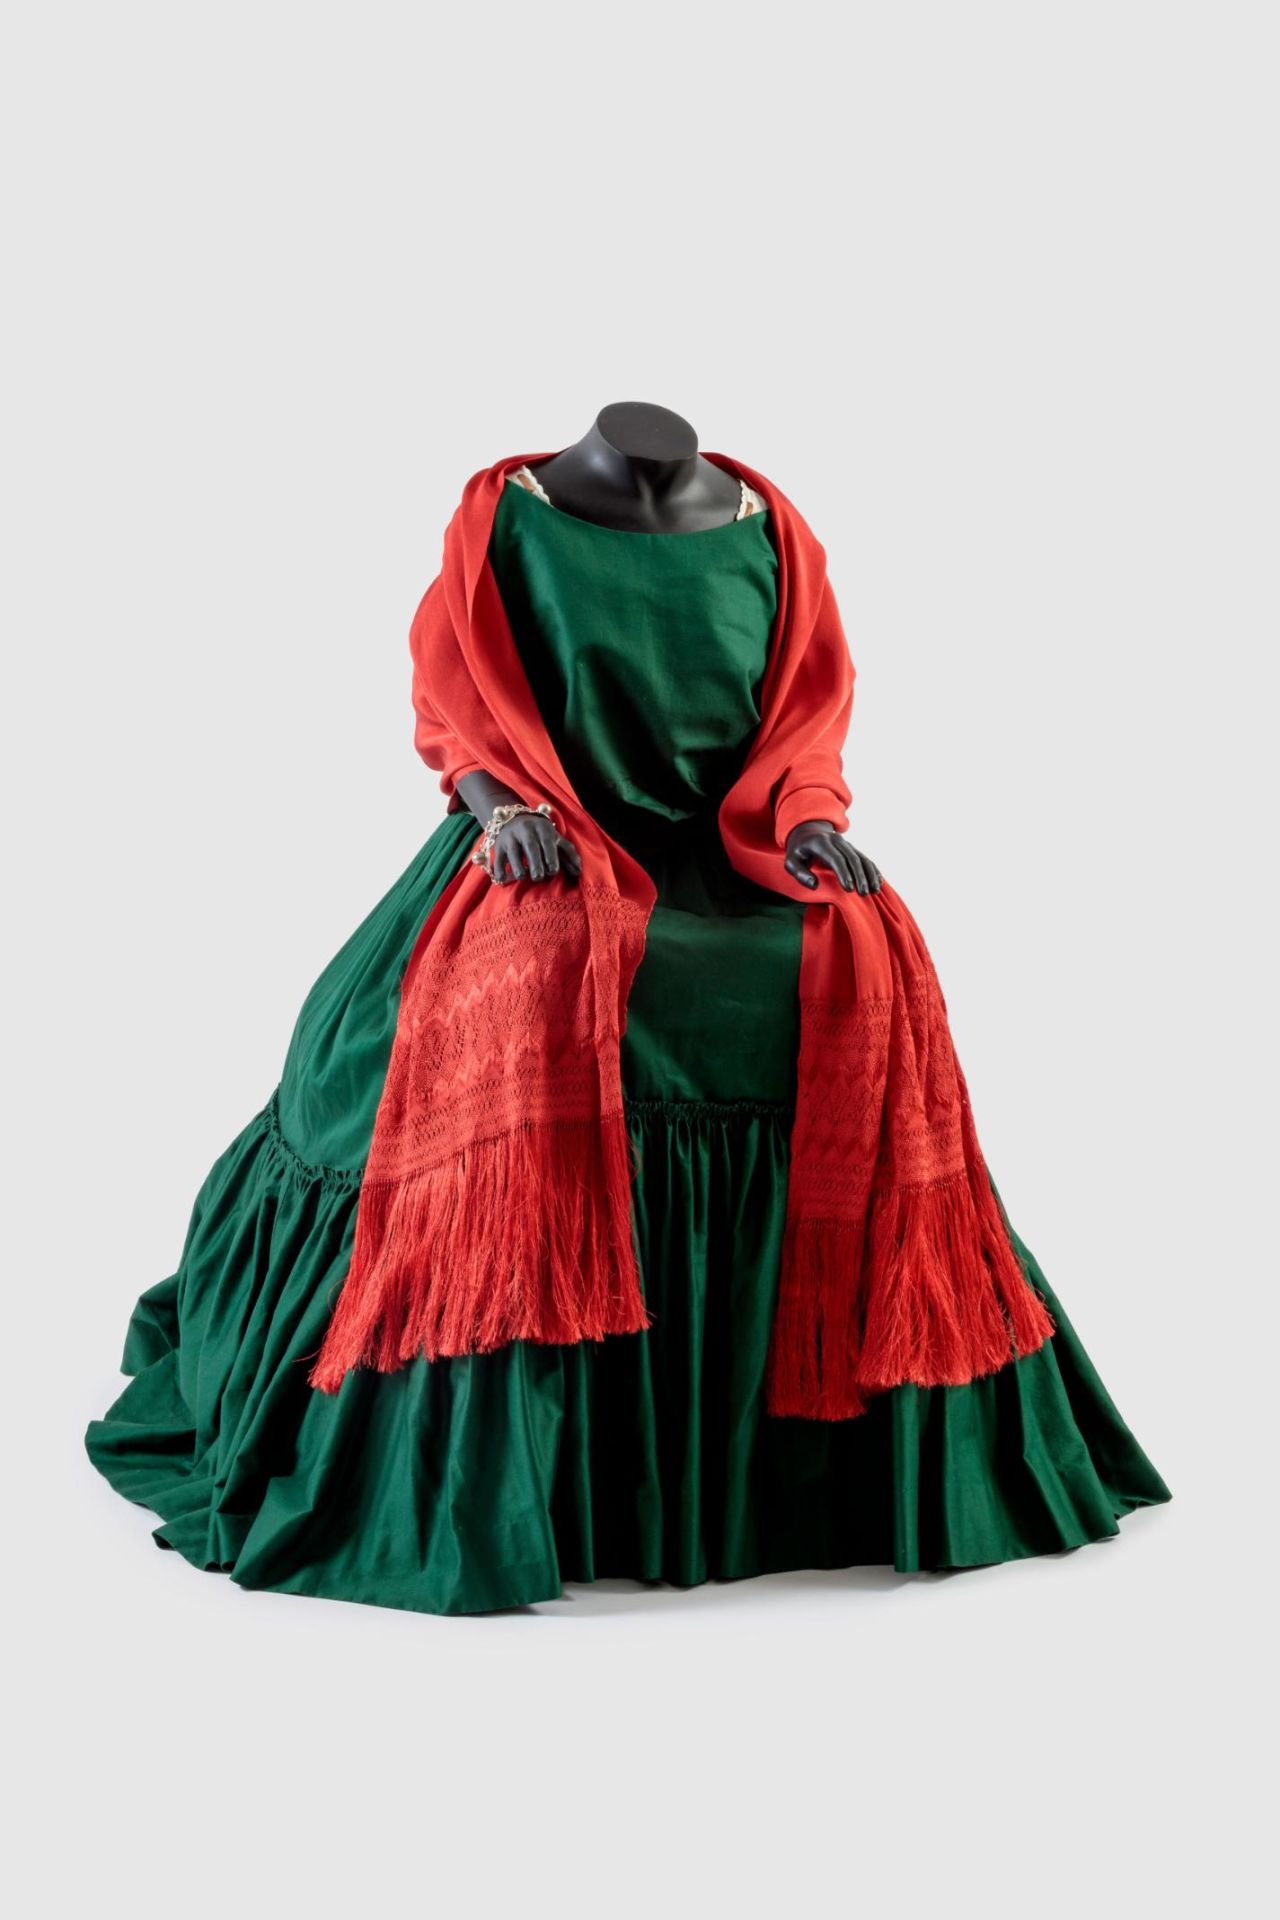 A costume worn by Salma Hayek in 2002's "Frida."